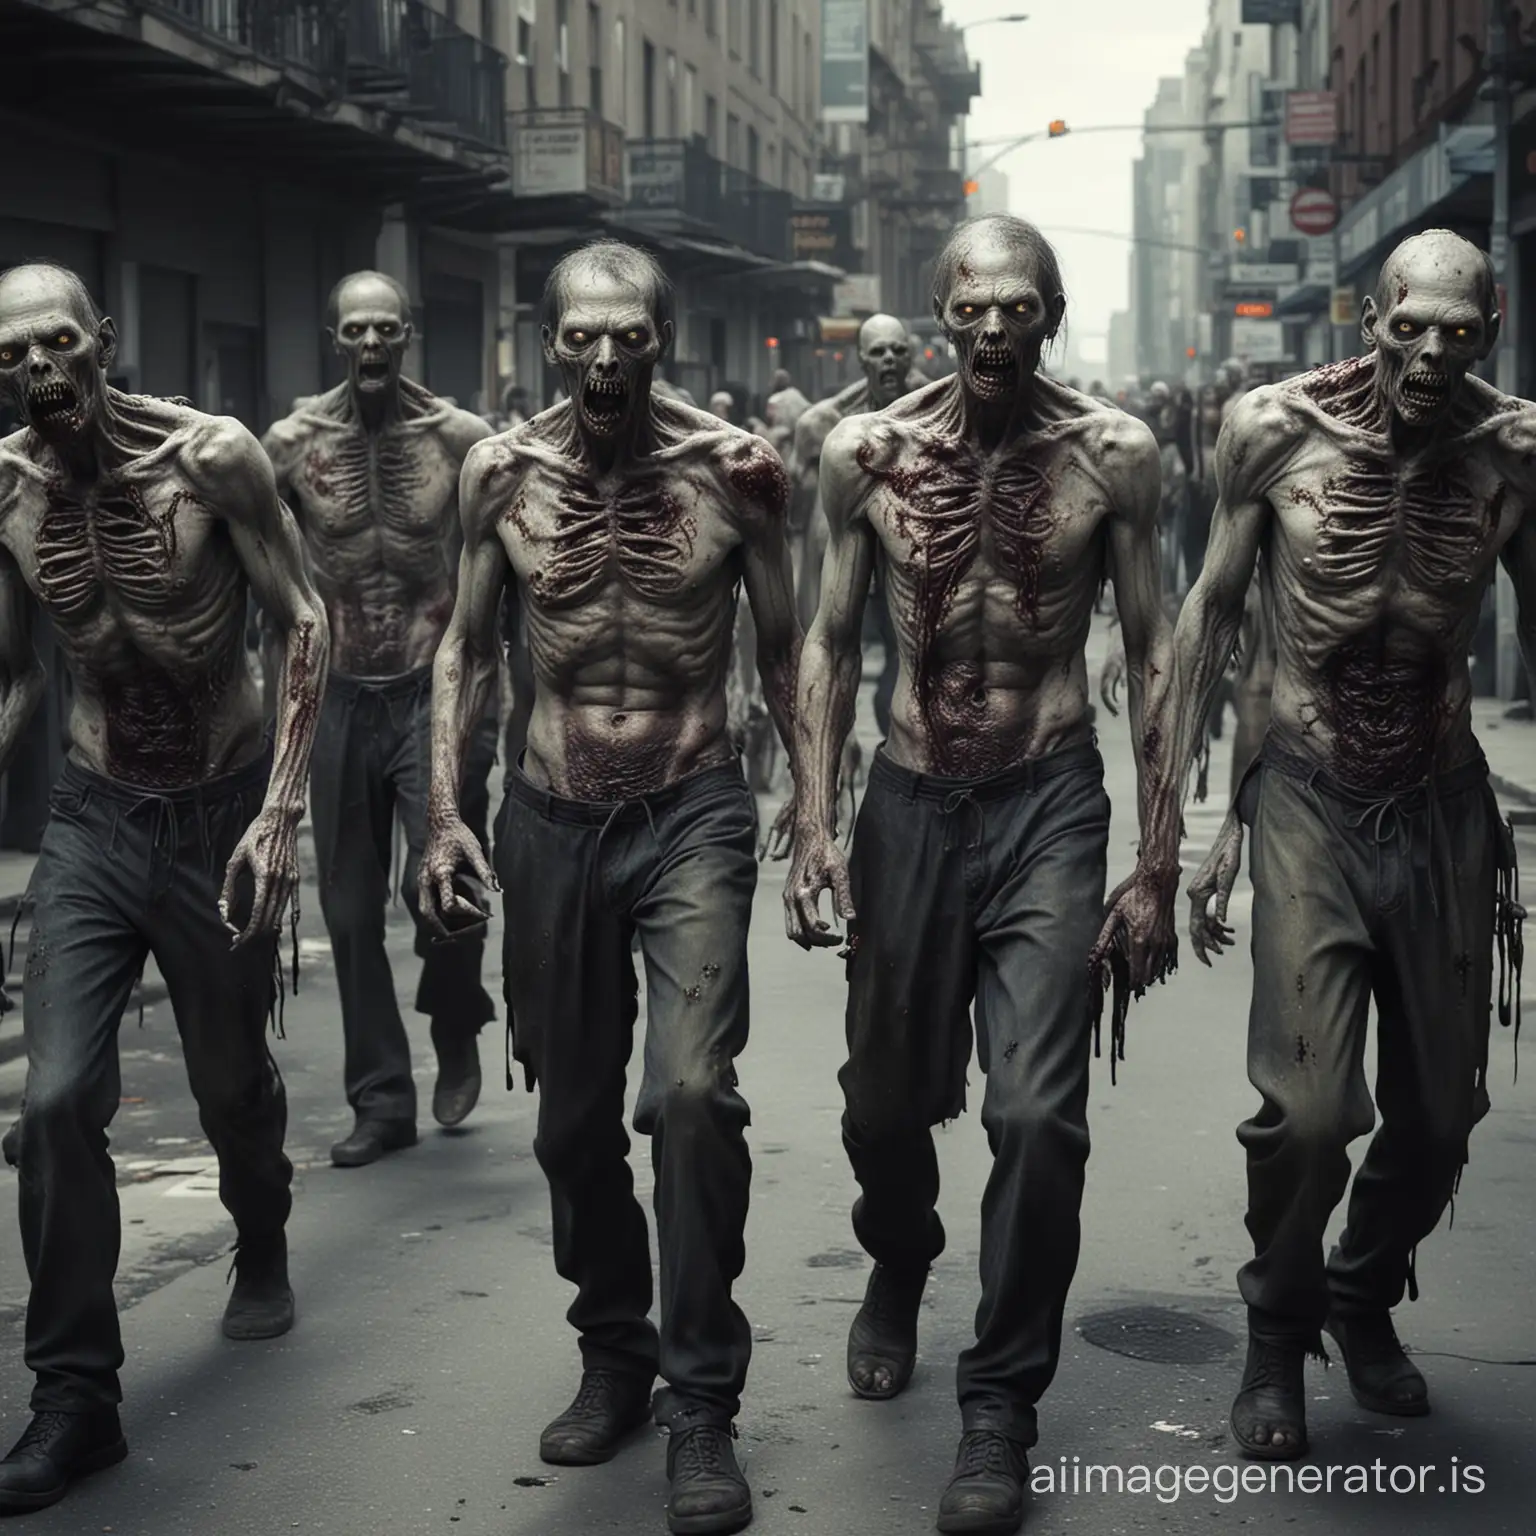 Zombies walking in city, scary, deformed bodies, ugly, eerie, haunting, dark, sharp image